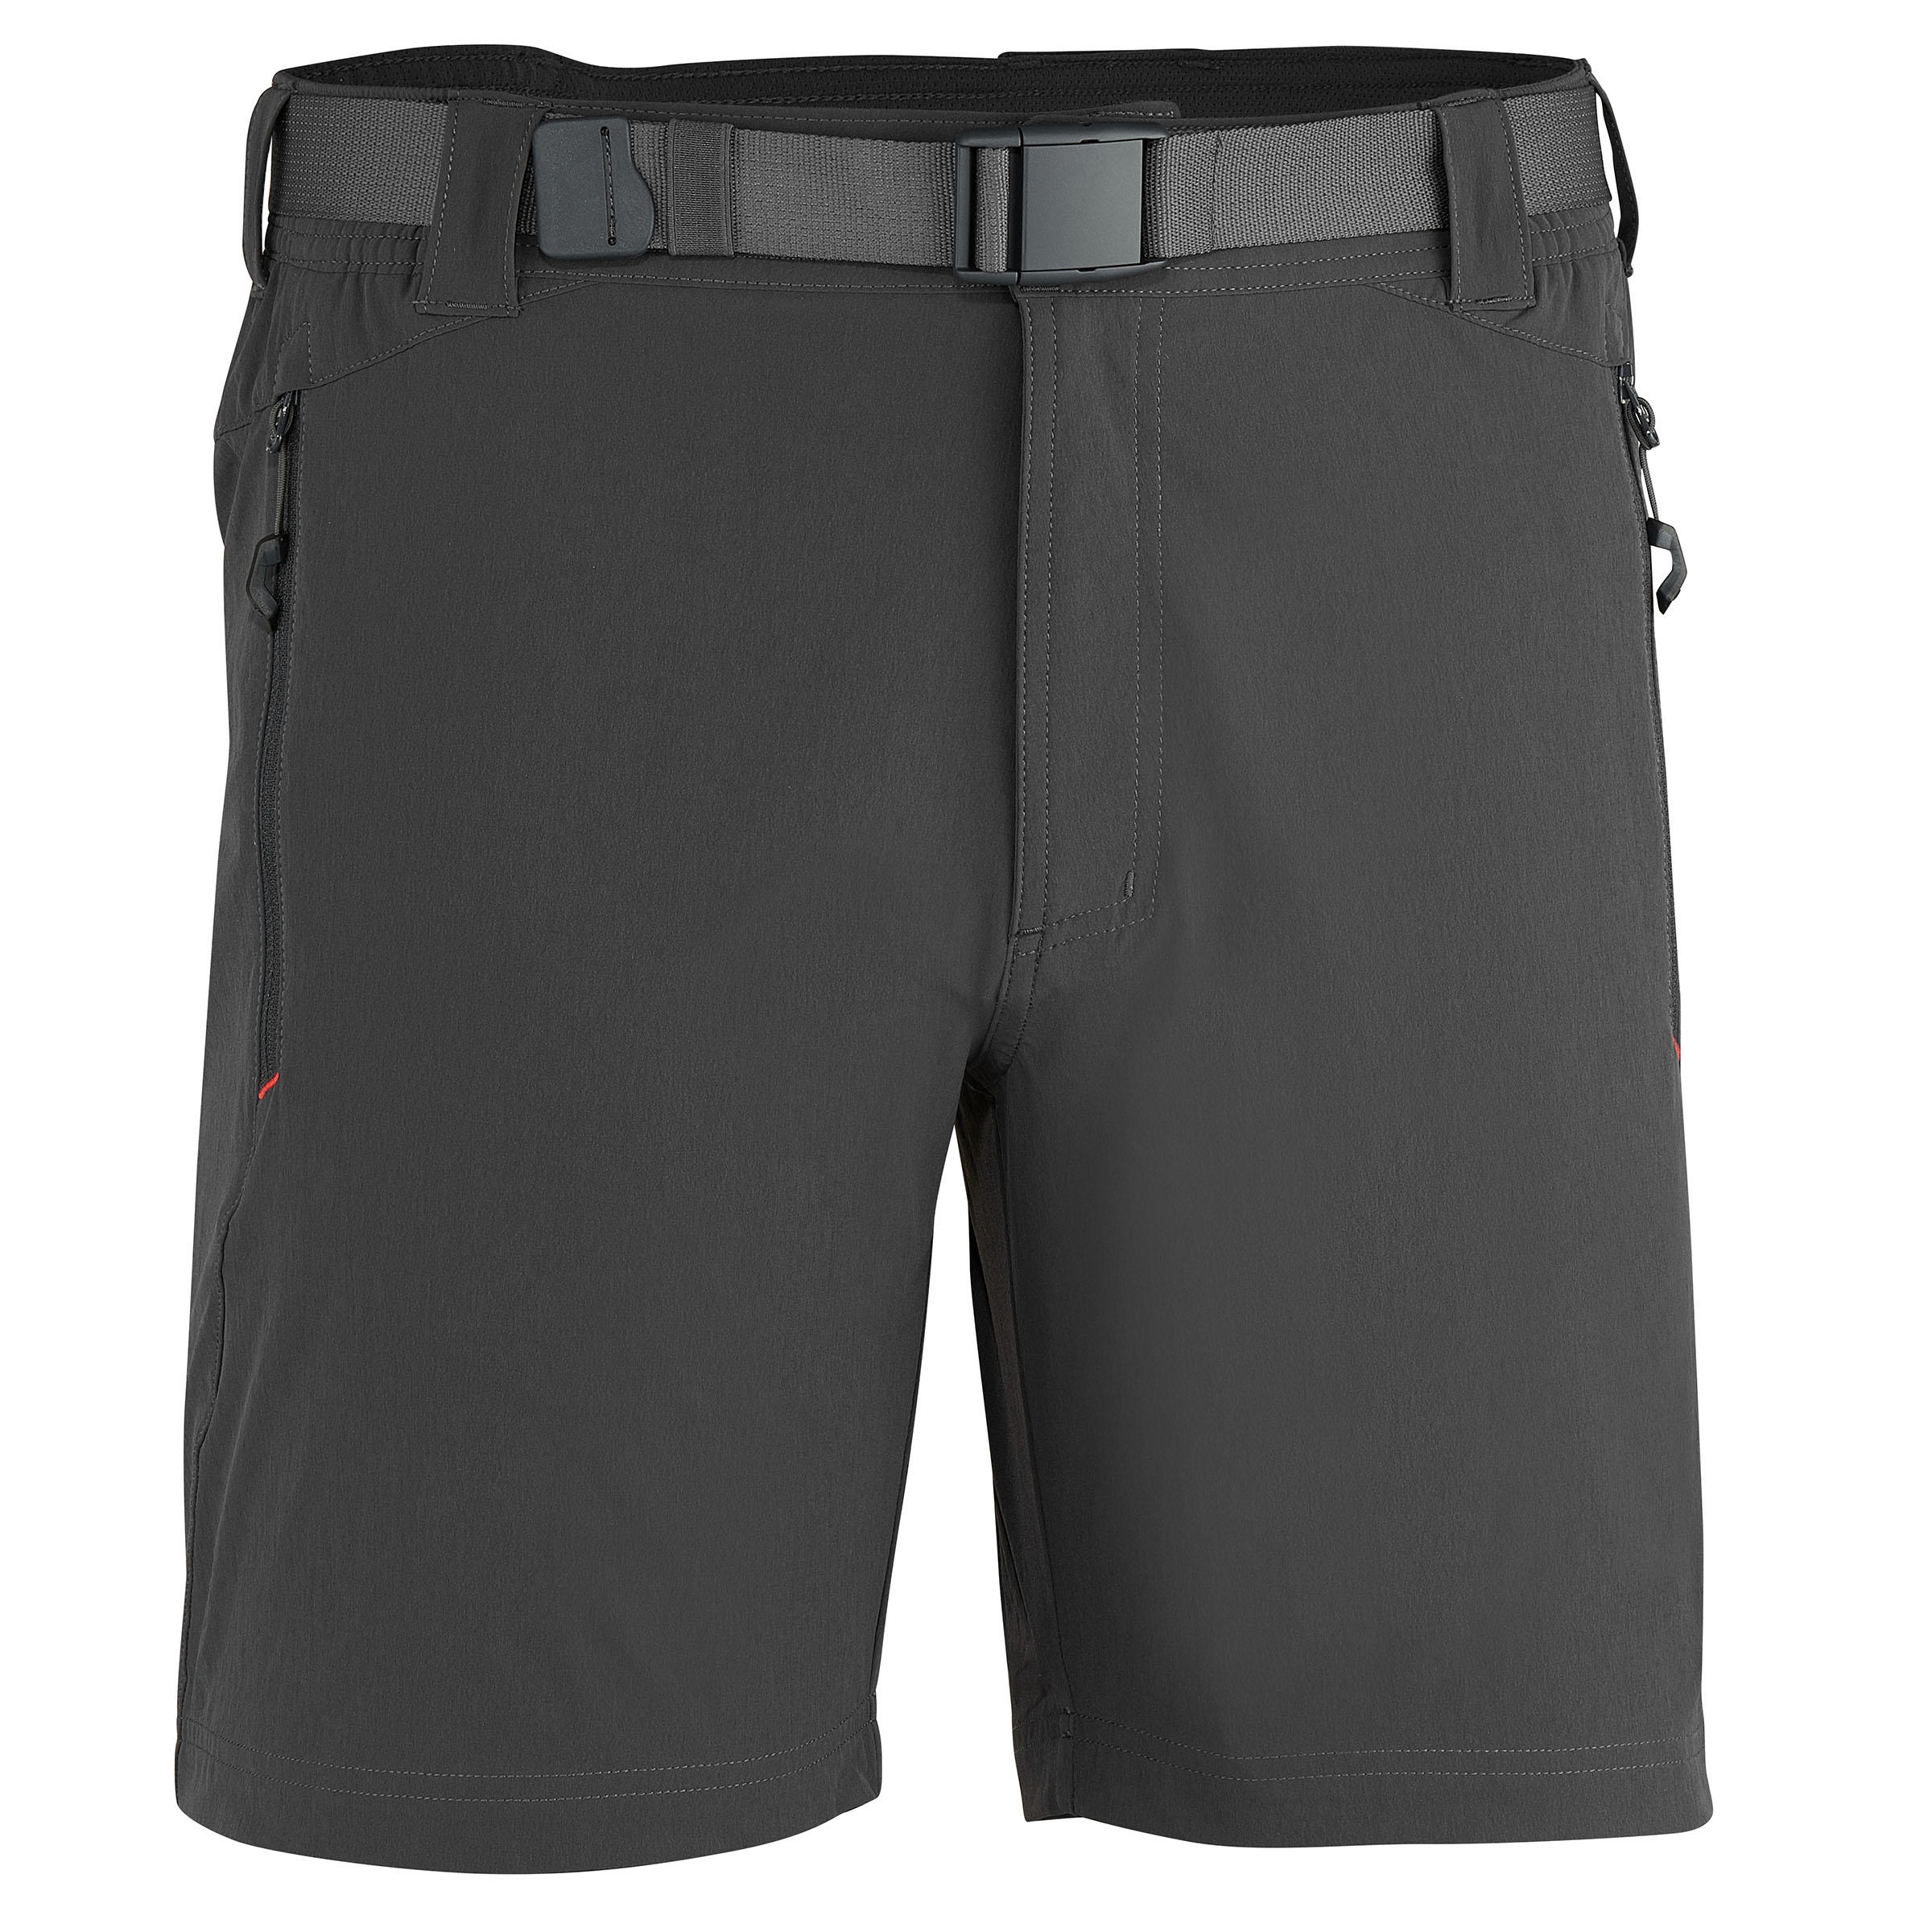 Forclaz 500 hiking shorts - Dark Grey 1/14